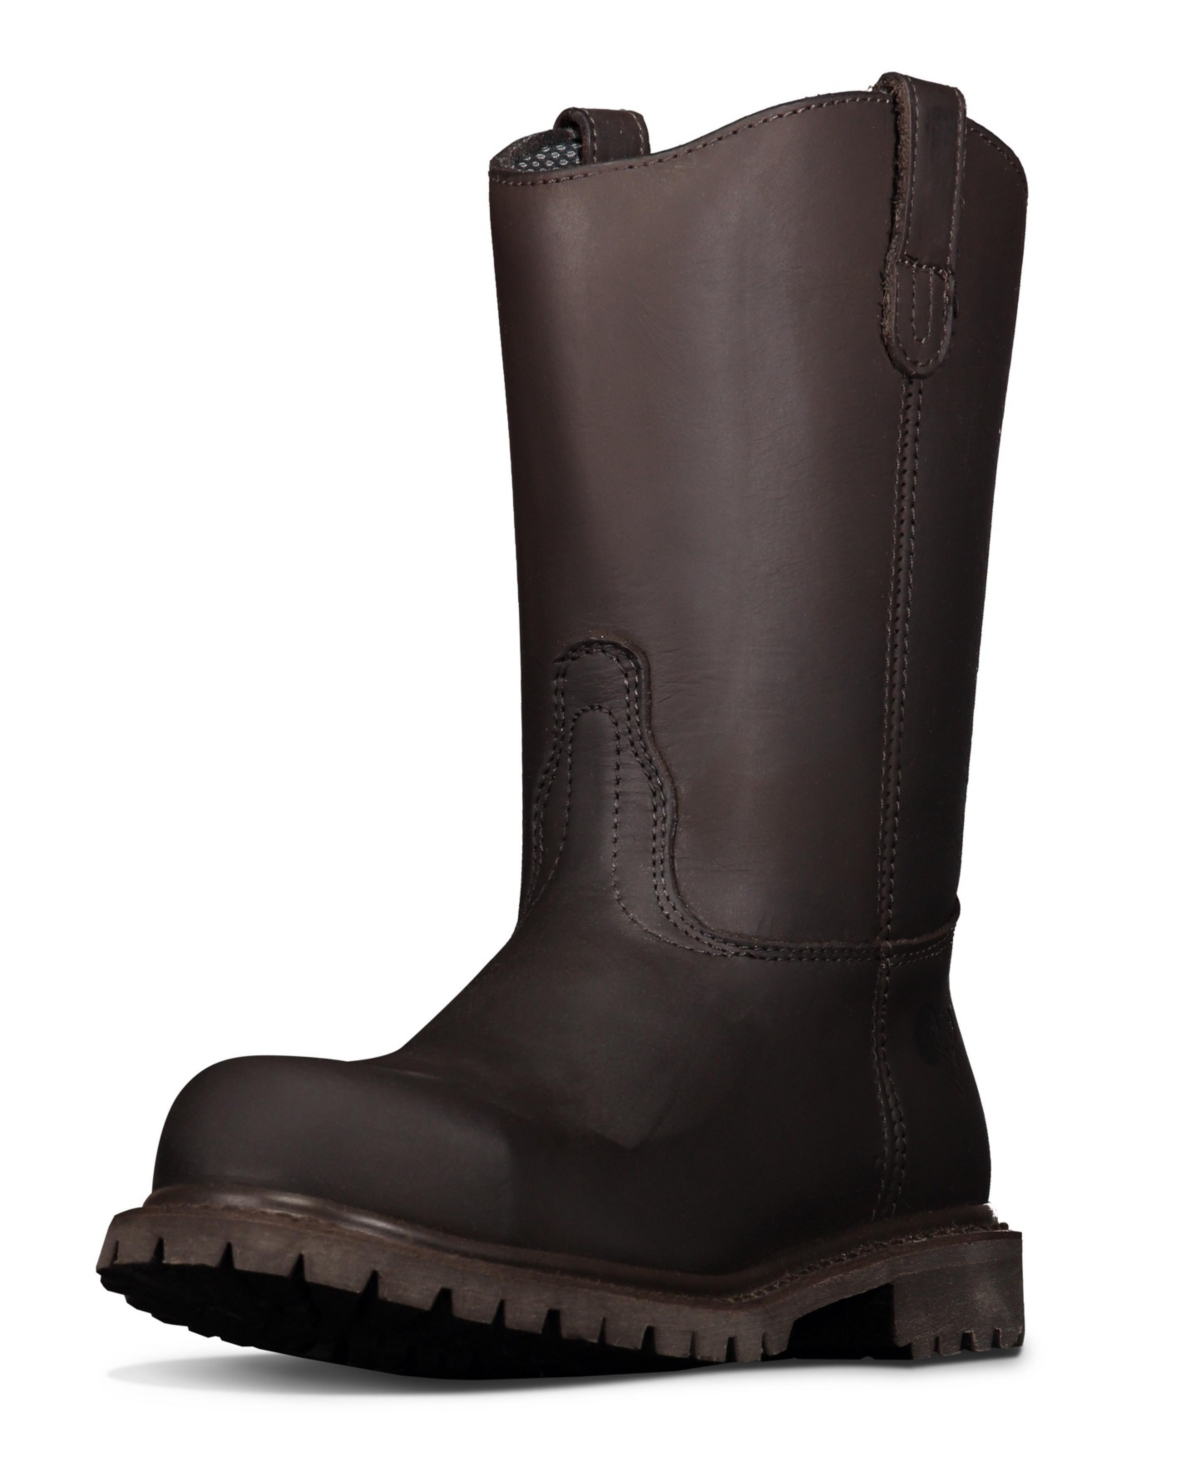 10" Wellington Steel Toe Work Boots for Men - Electrical Hazard - Oil and Slip Resistant - Black